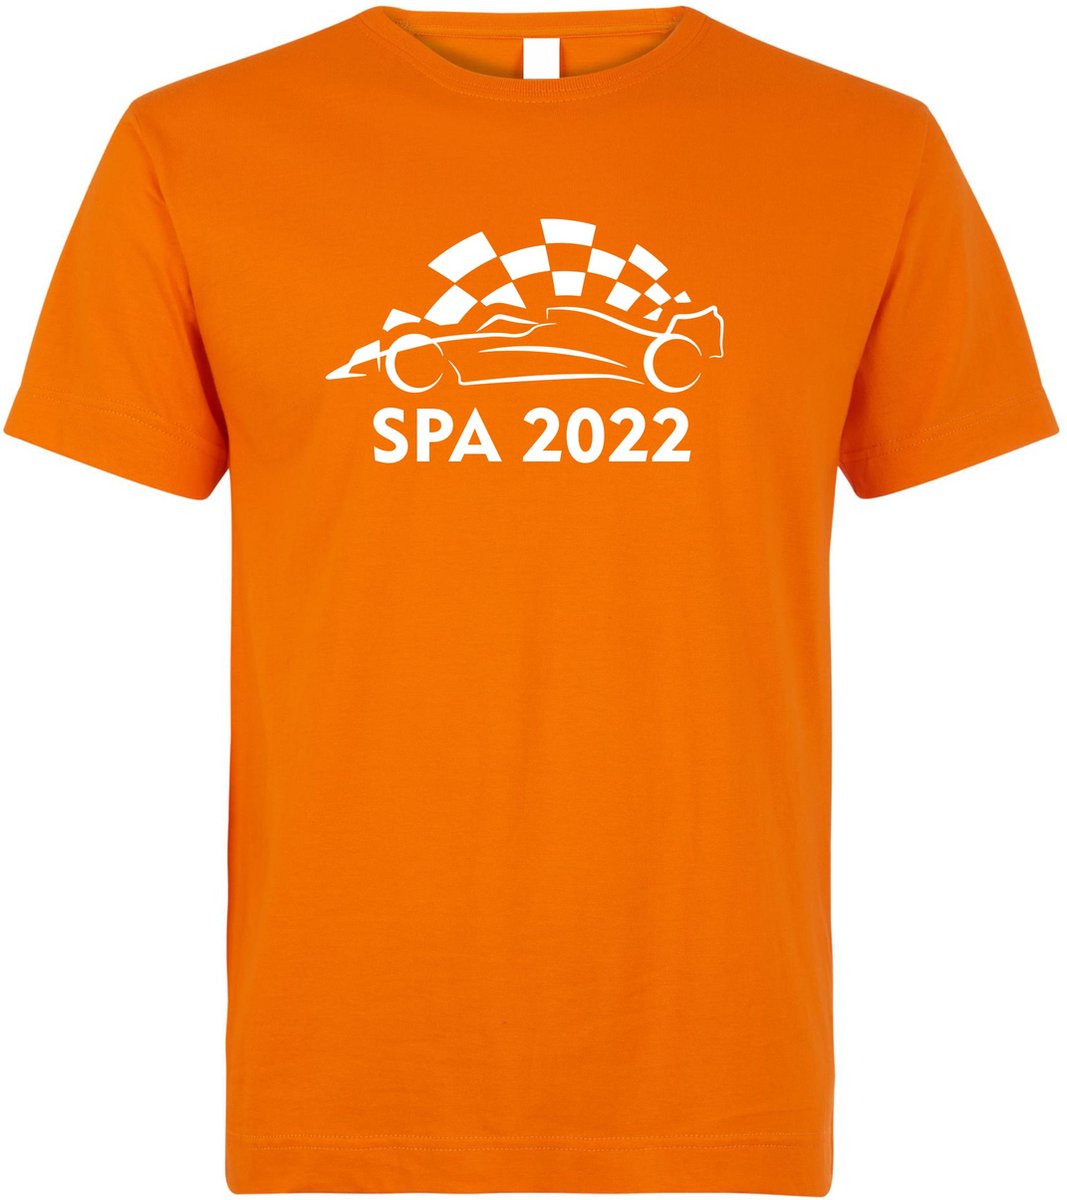 T-shirt kinderen Spa 2022 met raceauto | Max Verstappen / Red Bull Racing / Formule 1 fan | Grand Prix Circuit Spa-Francorchamps | kleding shirt | Oranje | maat 152